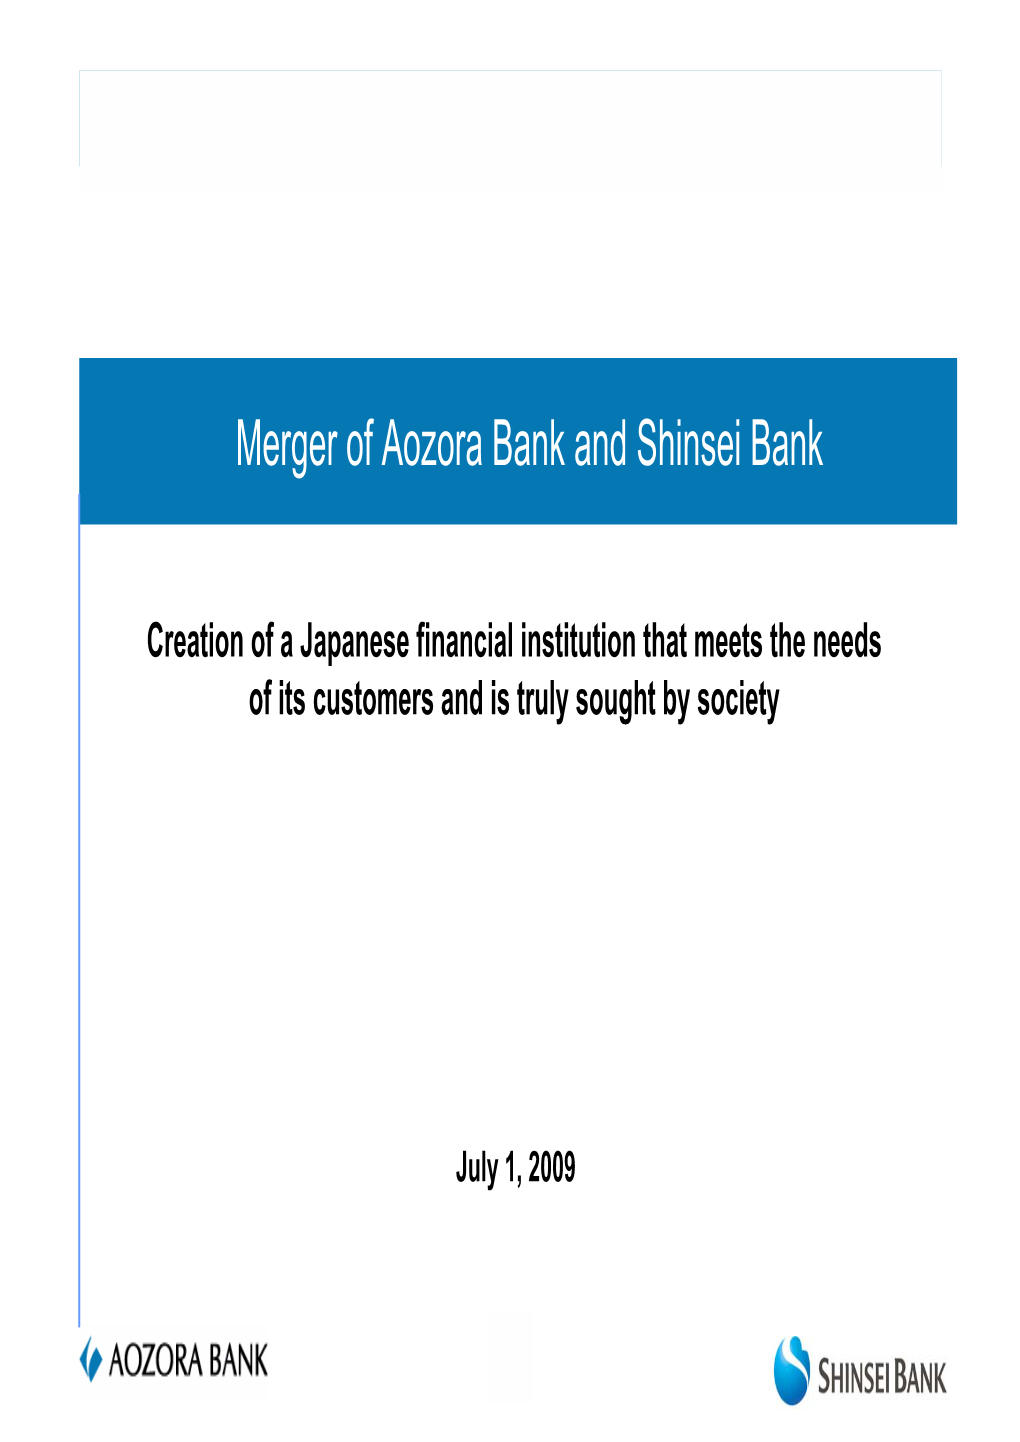 Merger of Aozora Bank and Shinsei Bank